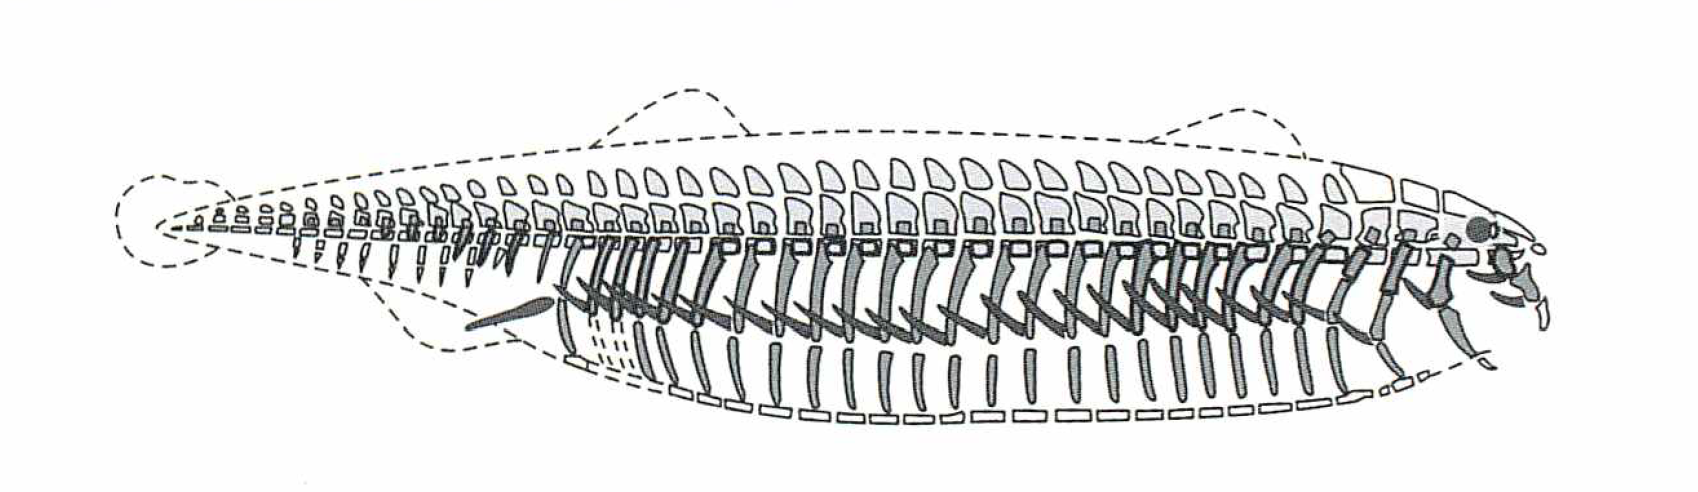 Special Story 脊椎動物の基本型 背骨を通して進化をみる | JT生命誌研究館